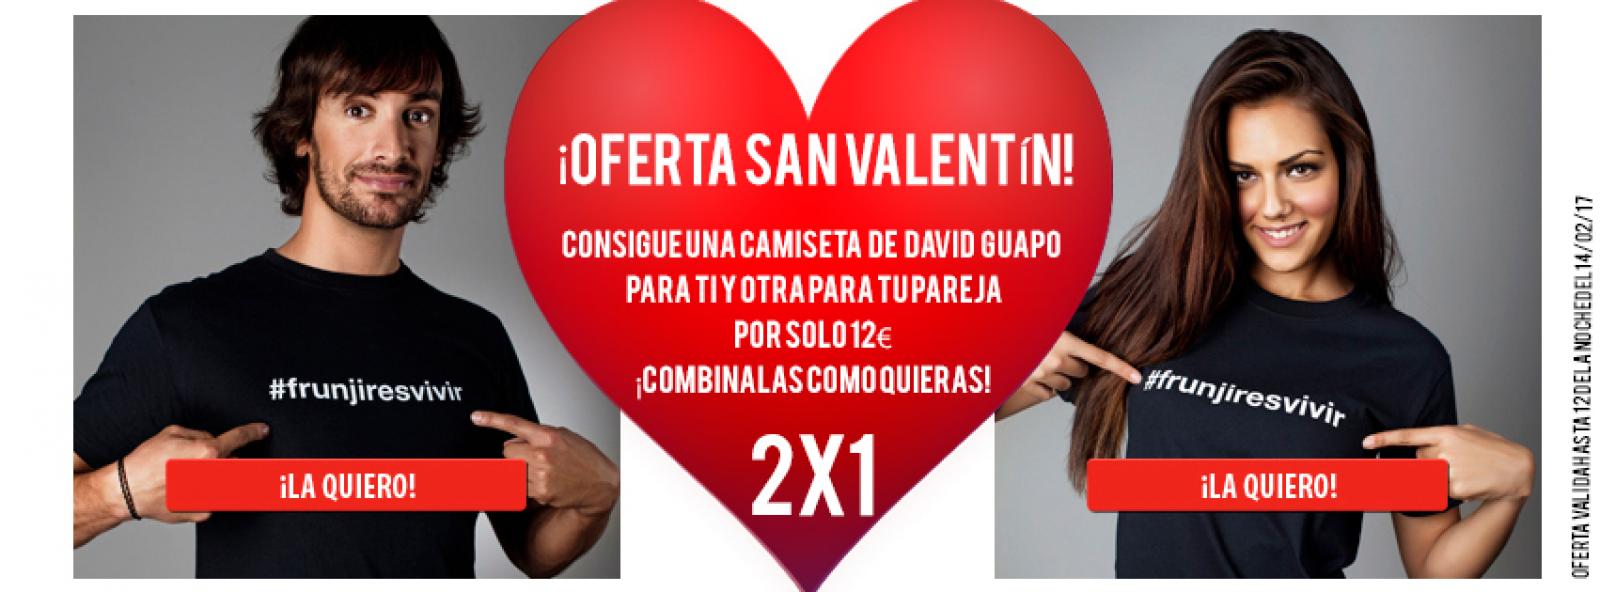 ¡Oferta San Valentín David Guapo!